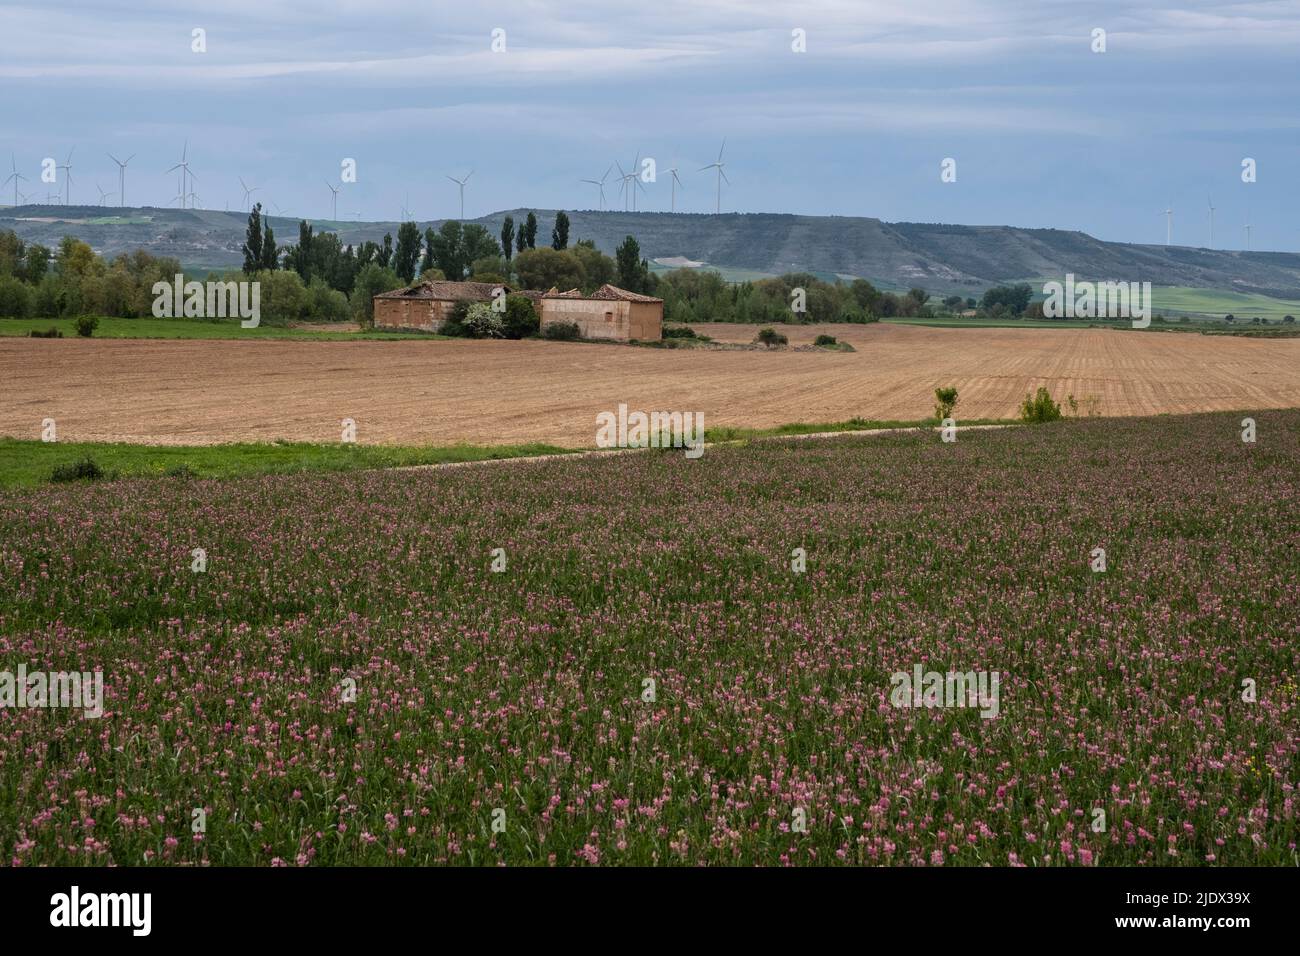 Spain, Castilla y Leon, near Castrojeriz.  Wildflowers, a Farmer's Field, and Windmills on Distant Ridge. Stock Photo